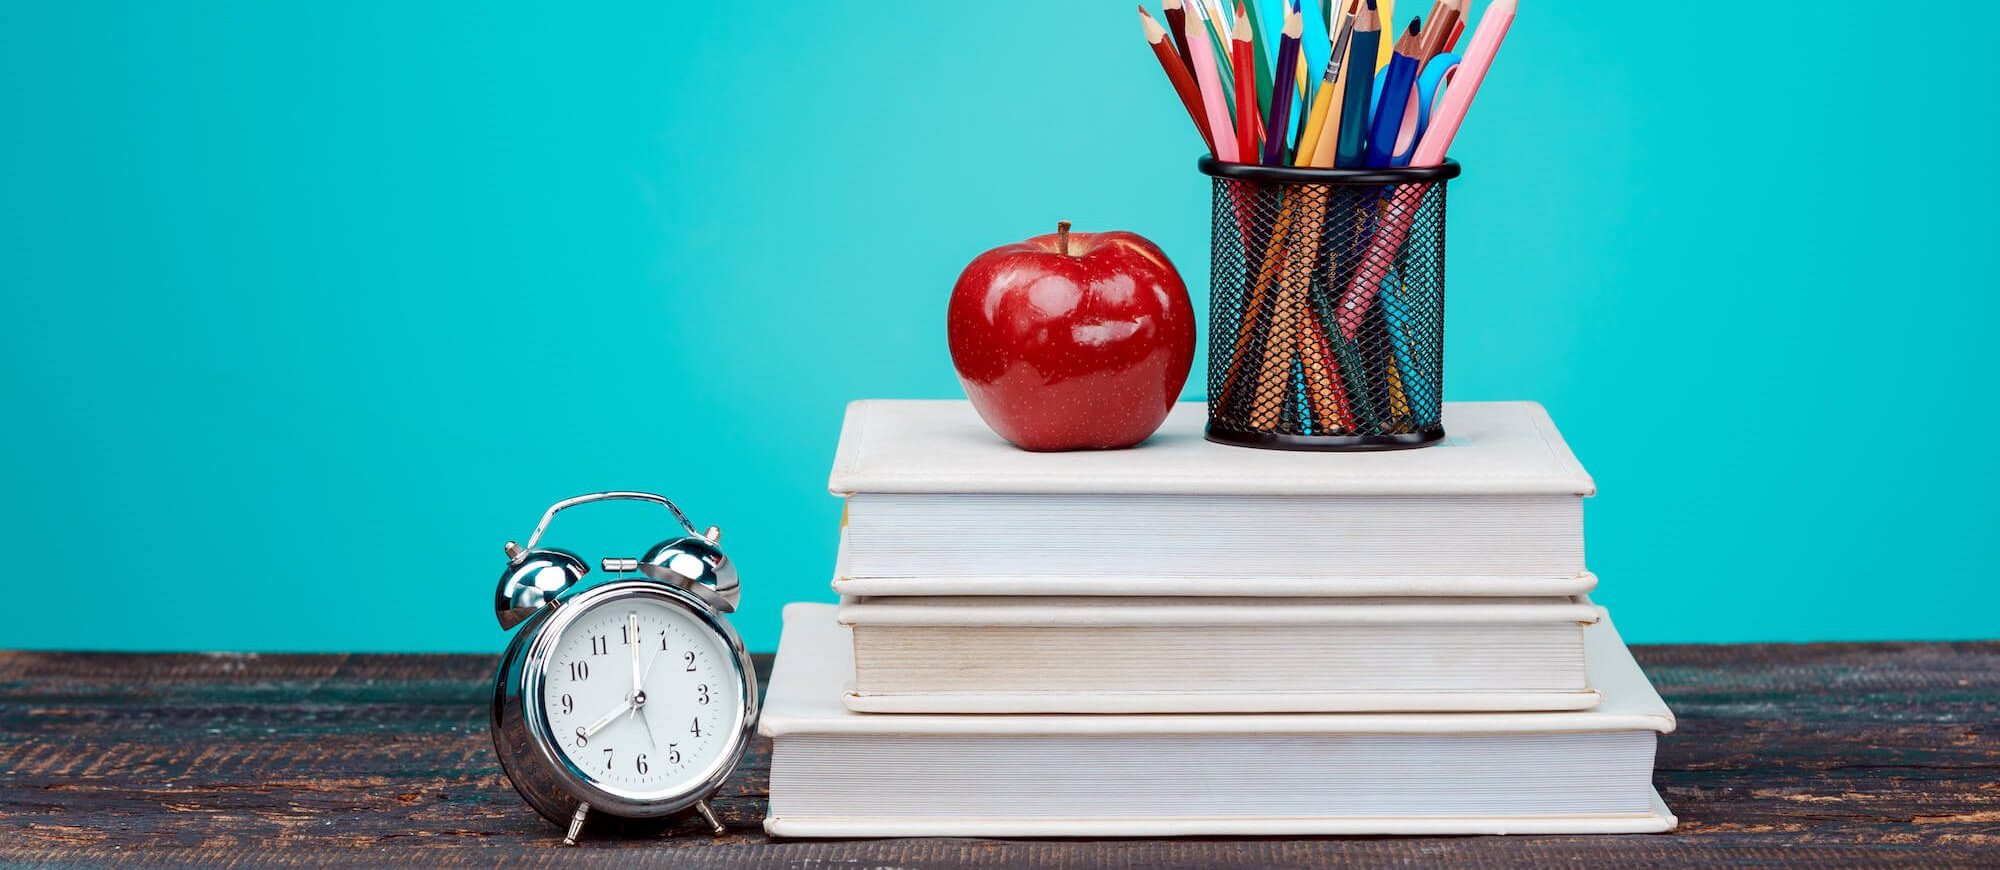 Books, pencils, apple, and clock